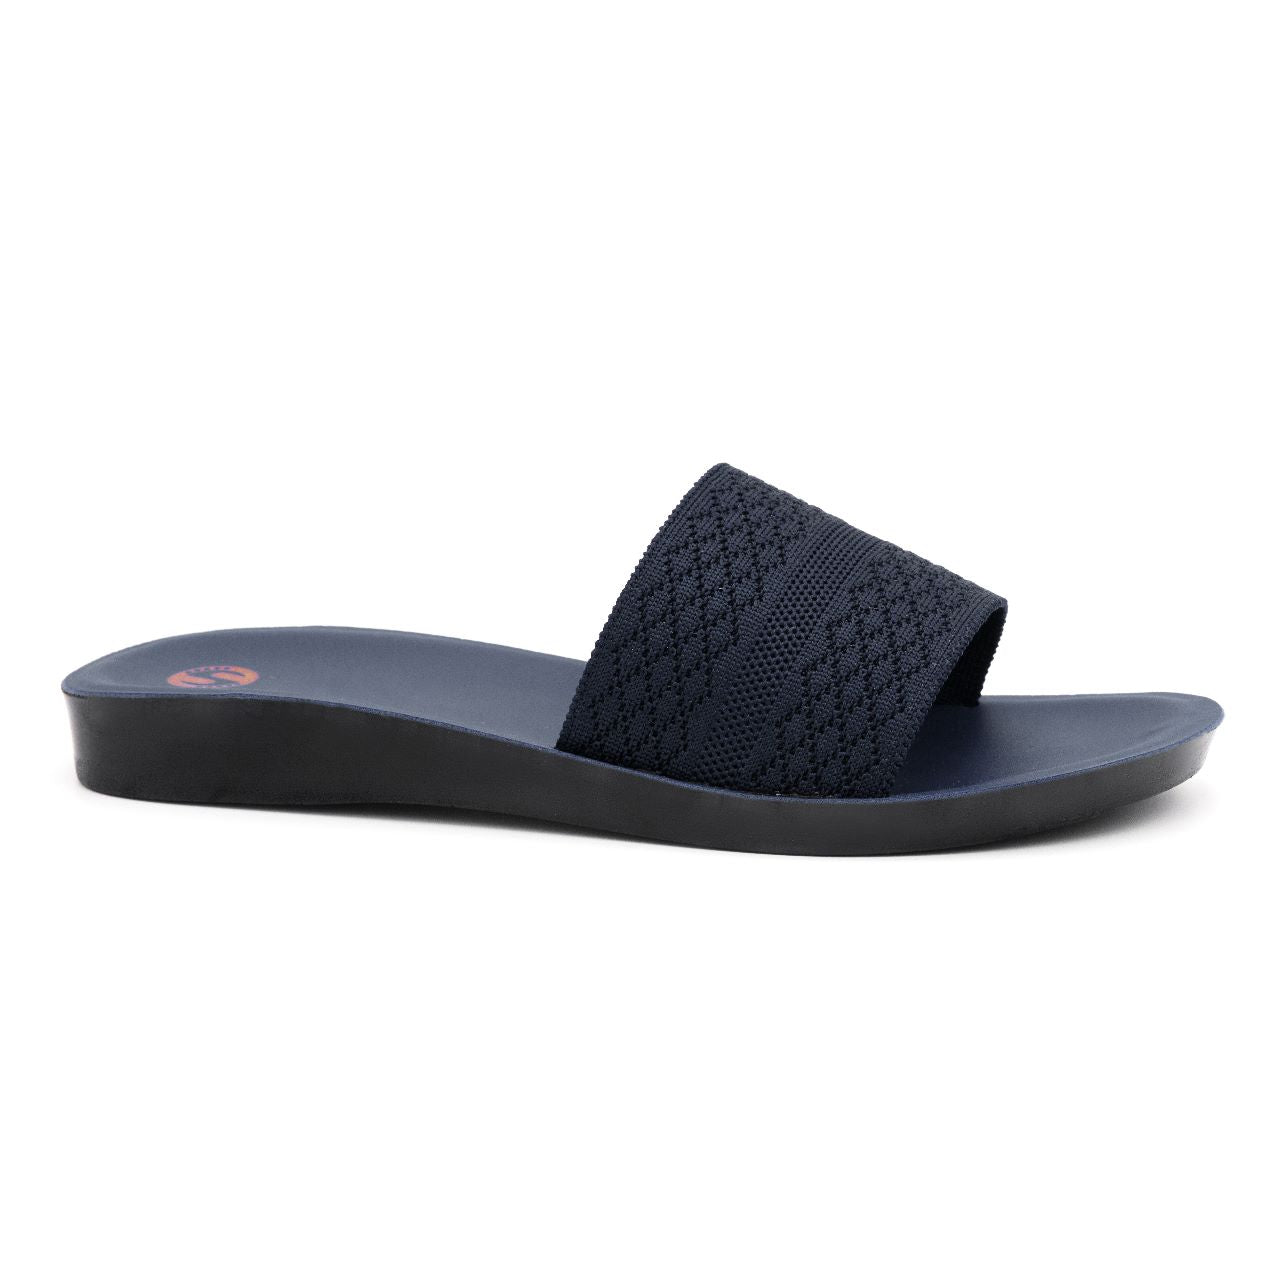 Simple flat slipper